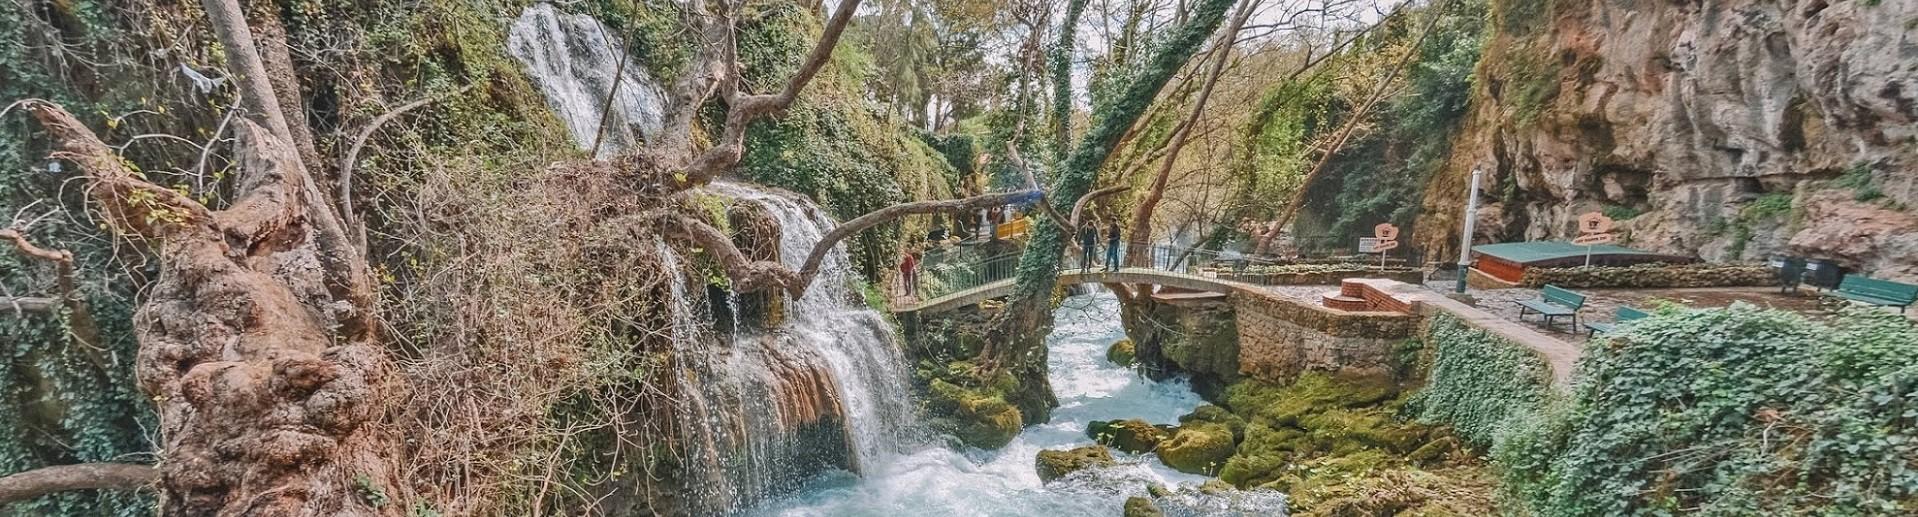 آبشارهای دودن آنتالیا DudenWaterfalls Antalya